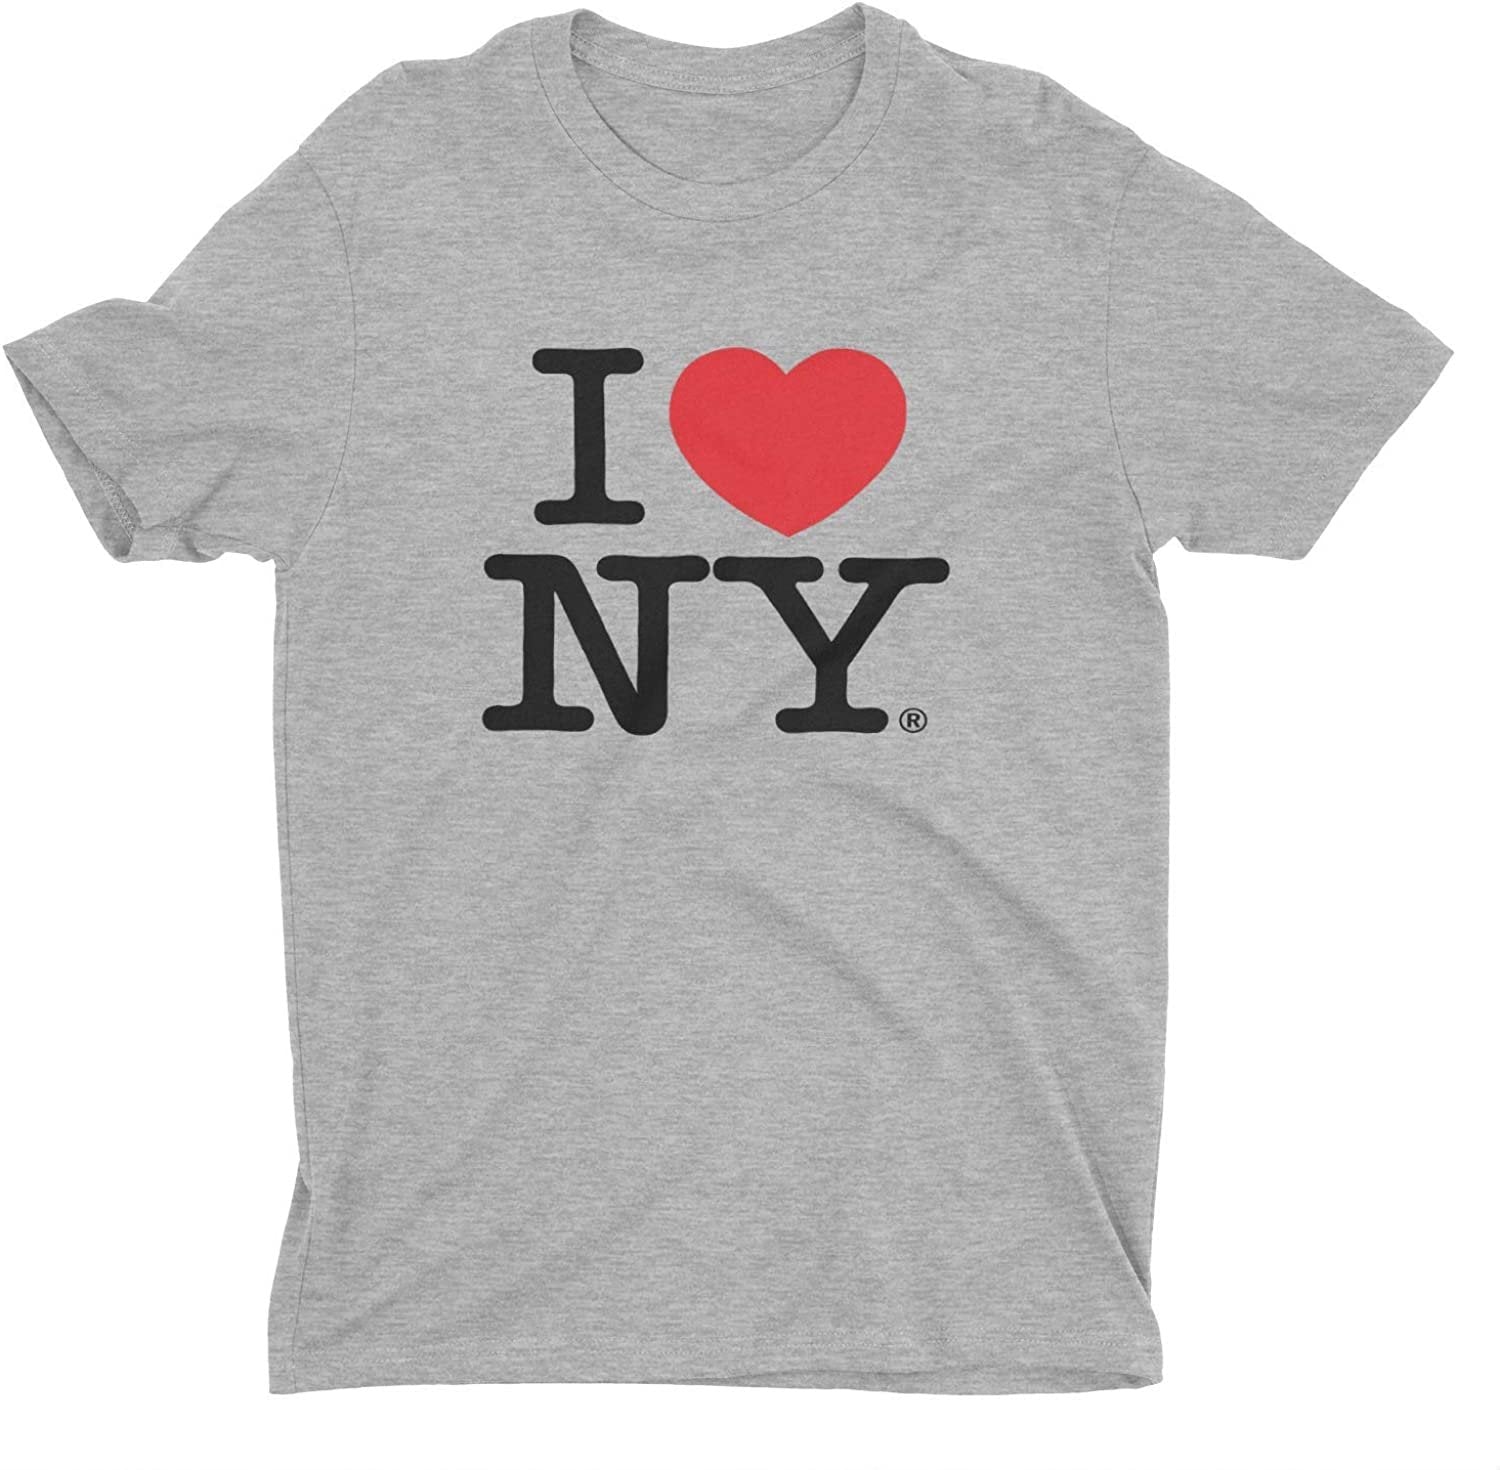 Ich liebe NY Retro Vintage T-Shirt Heather Grey